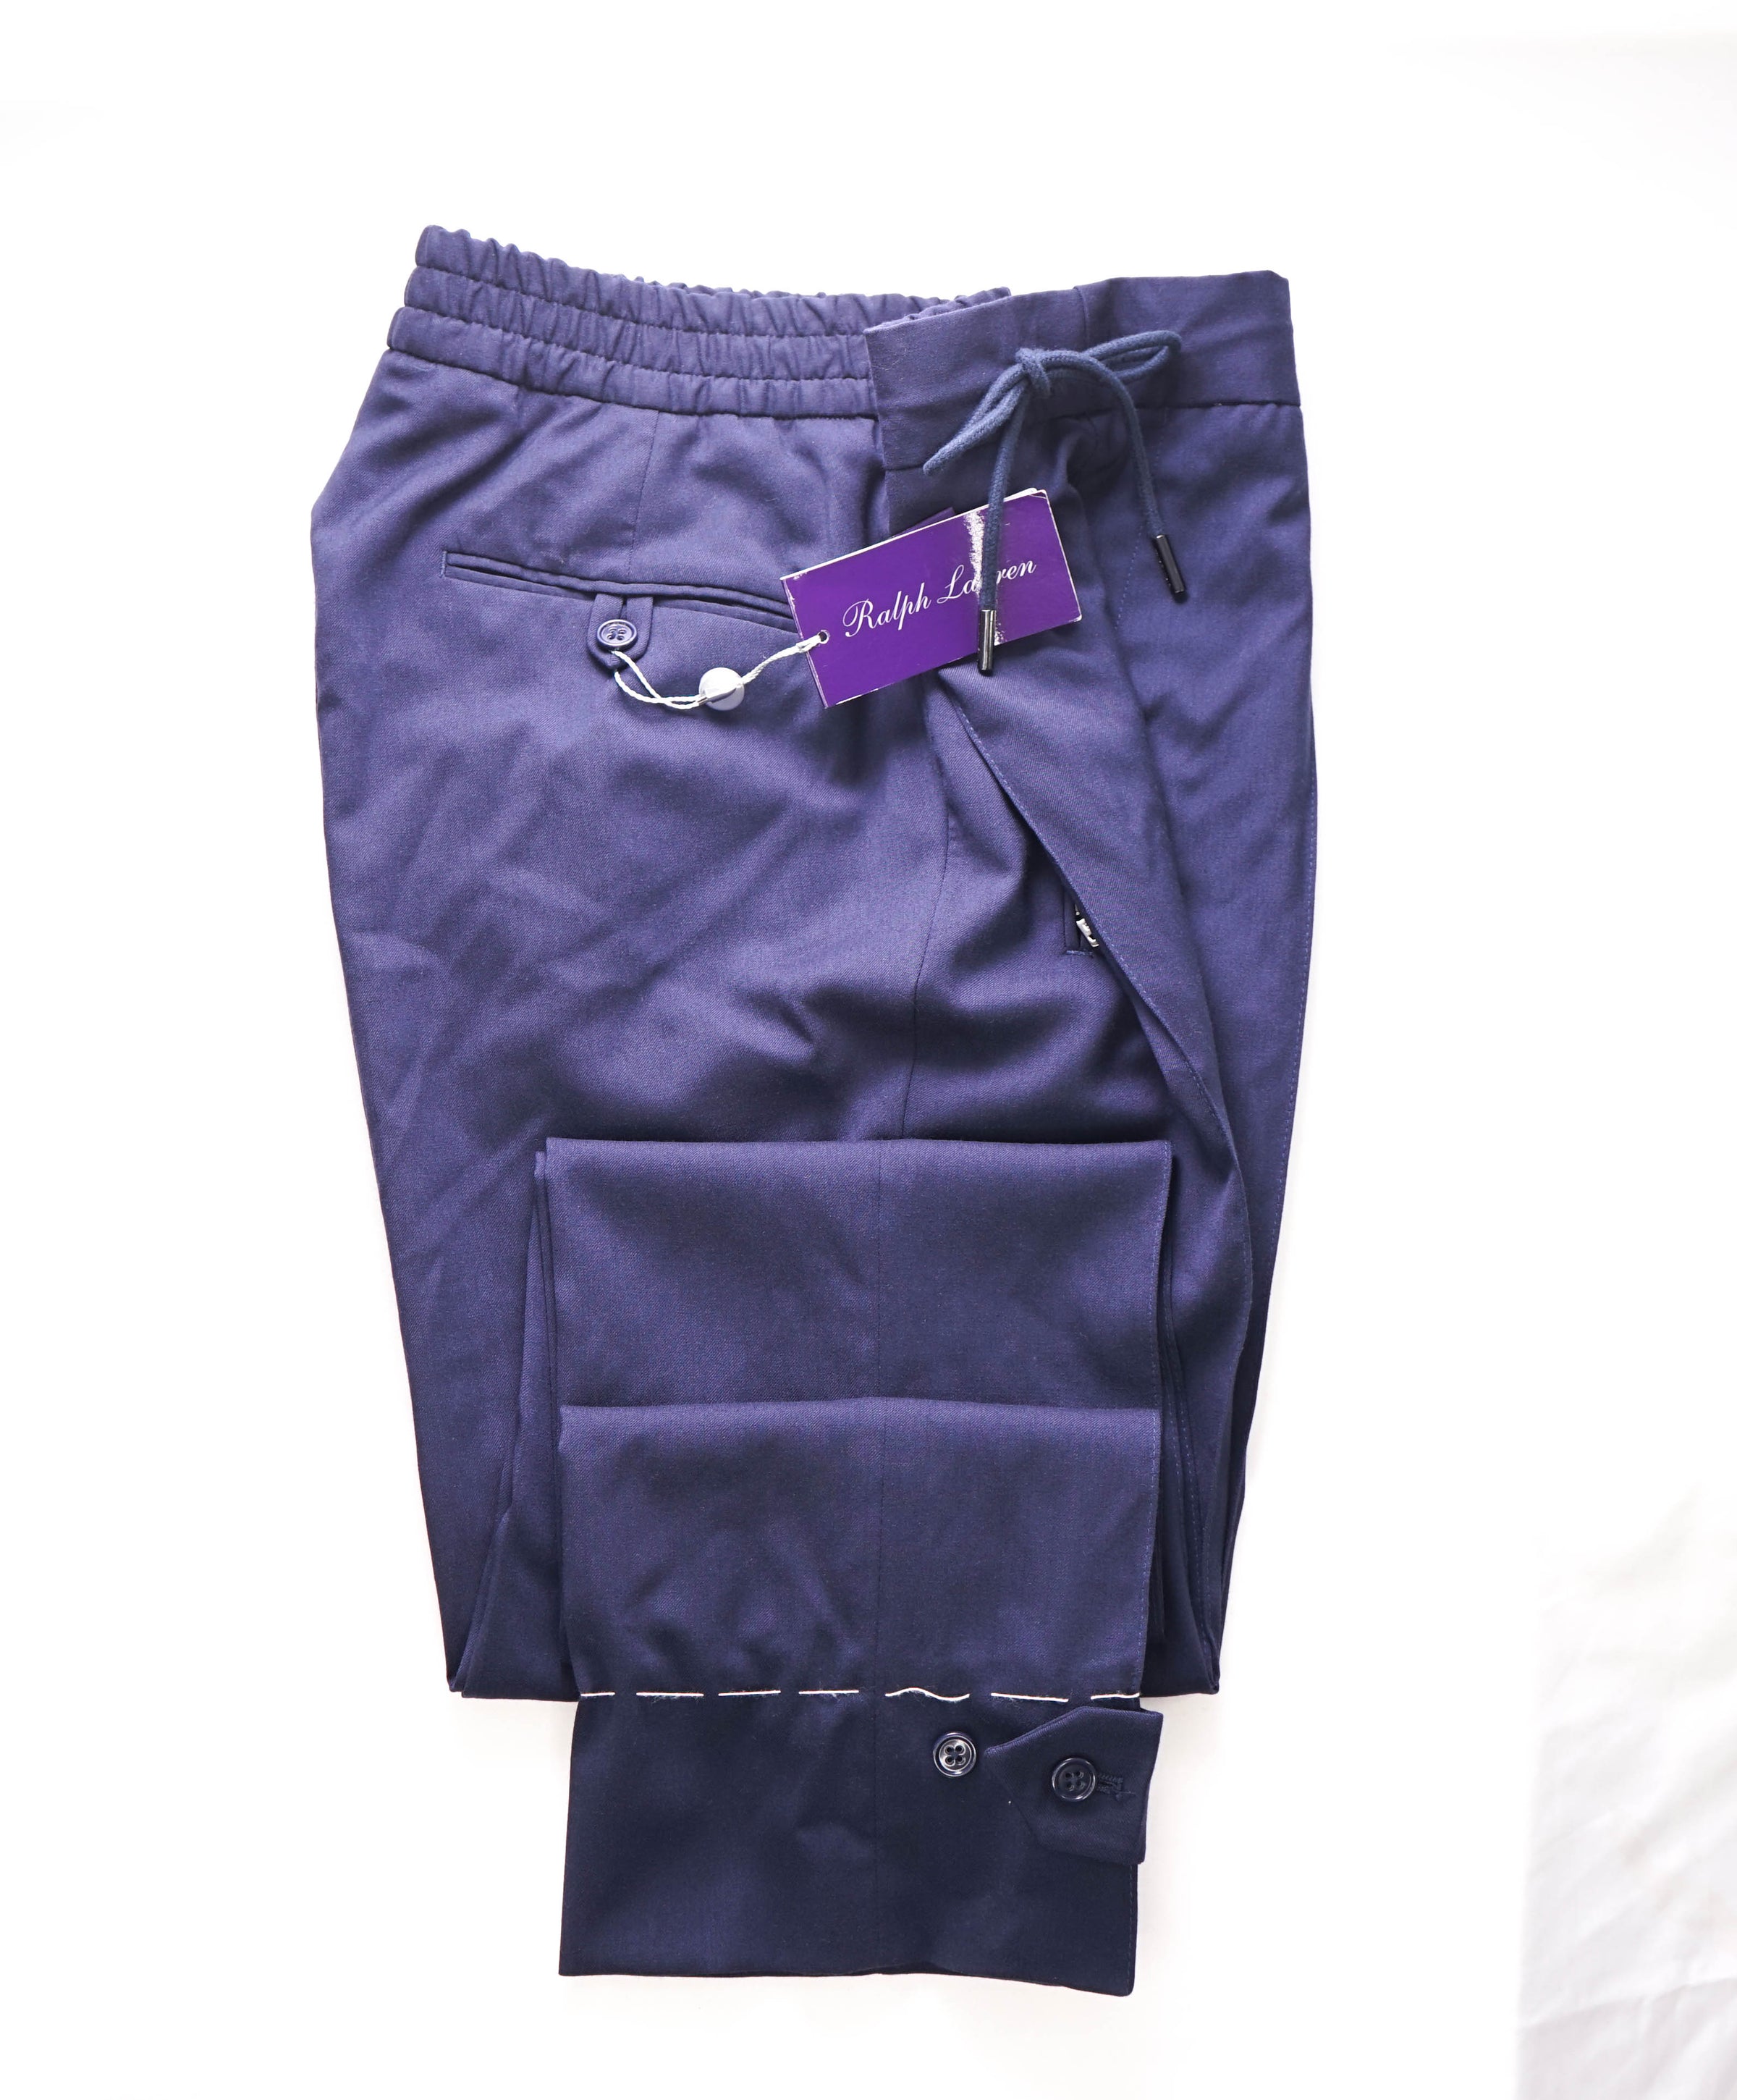 RALPH LAUREN PURPLE LABEL - Wool Flannel Joggers Flat Front Pants